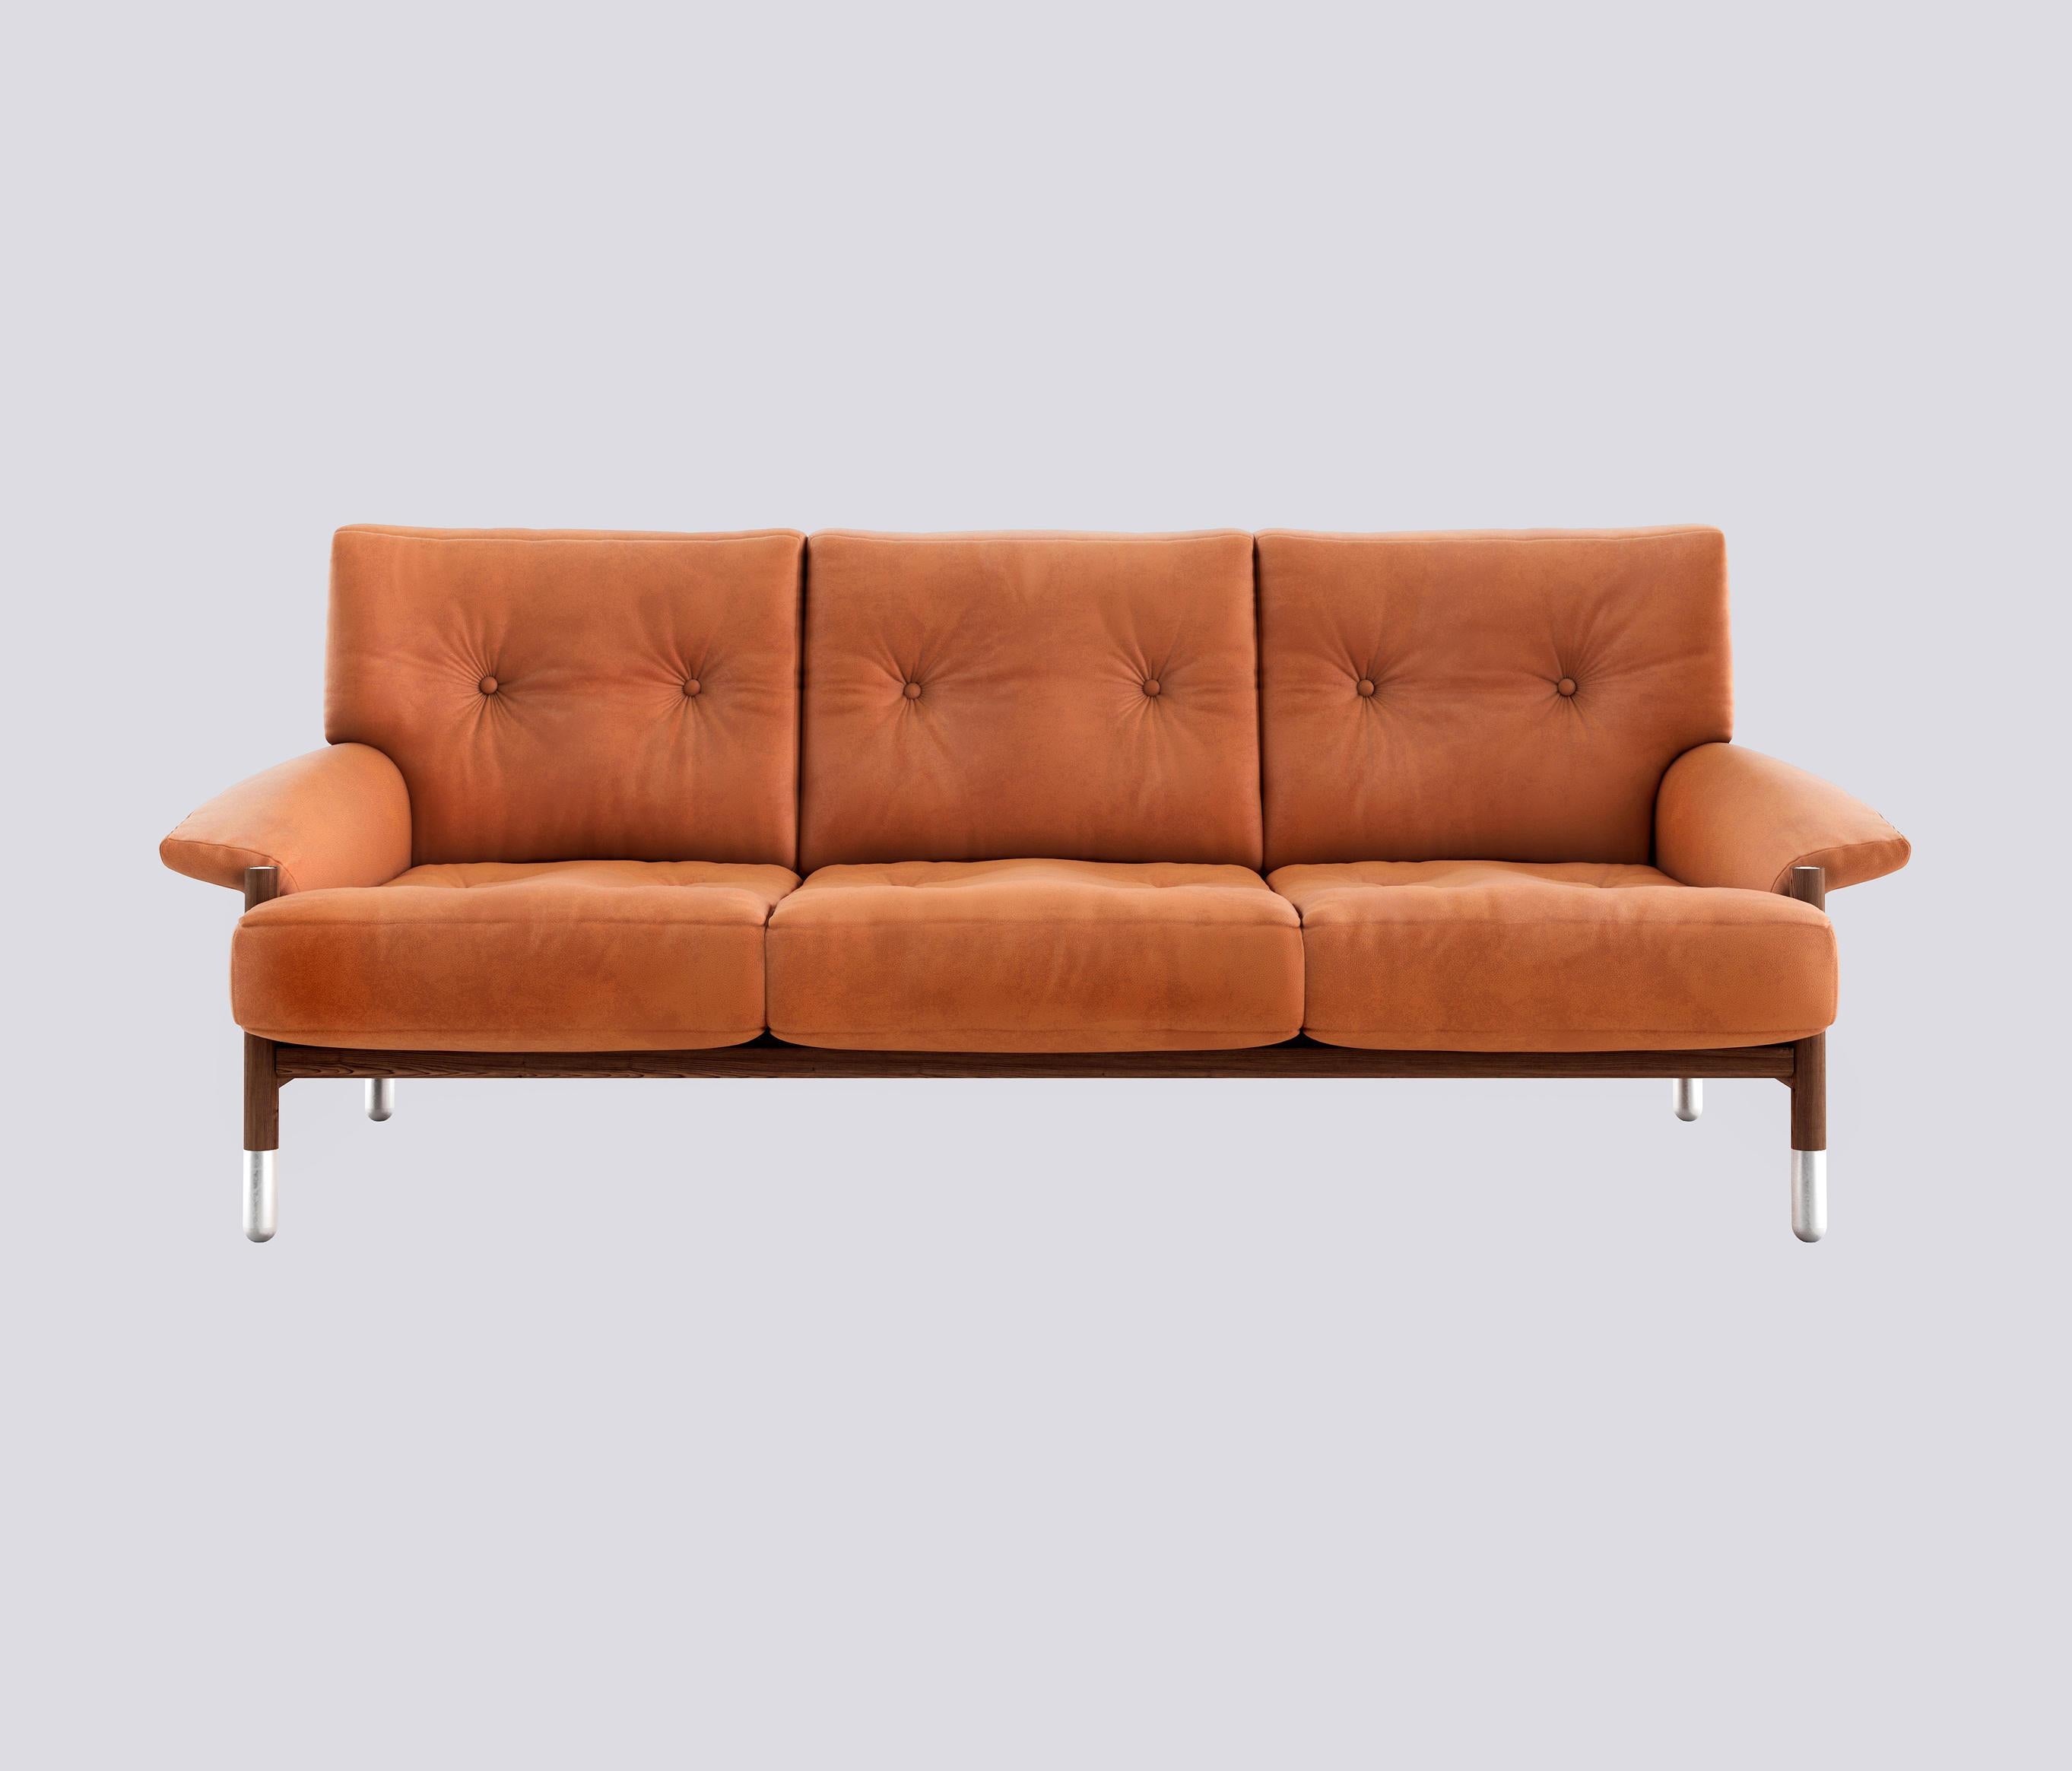 Anpassbares Tacchini-Sella-Sofa, entworfen von Carlo de Carli (Leder) im Angebot